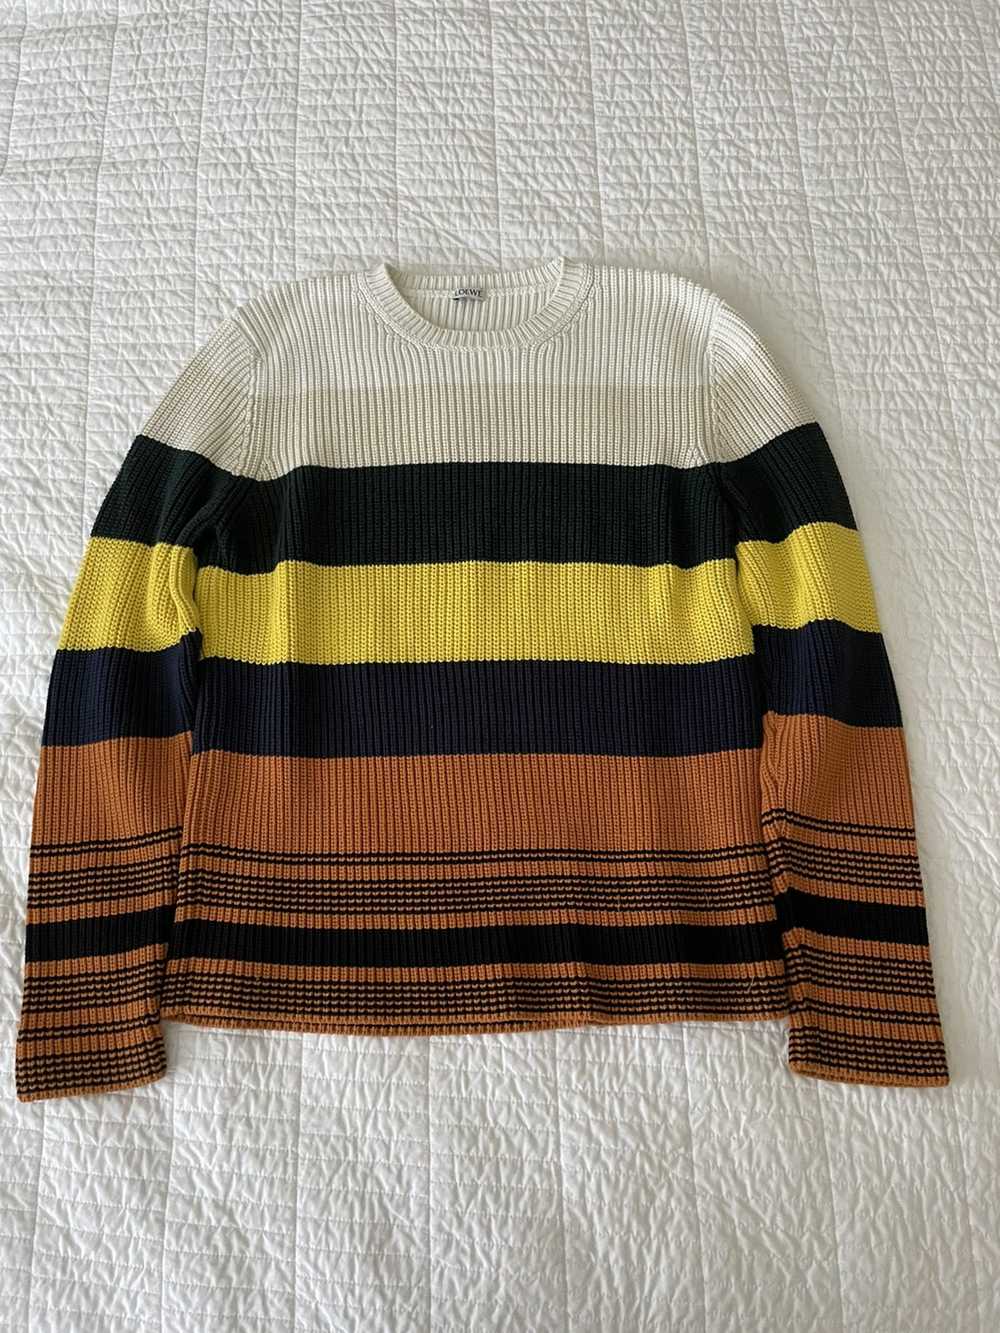 Loewe Loewe sweater - image 1